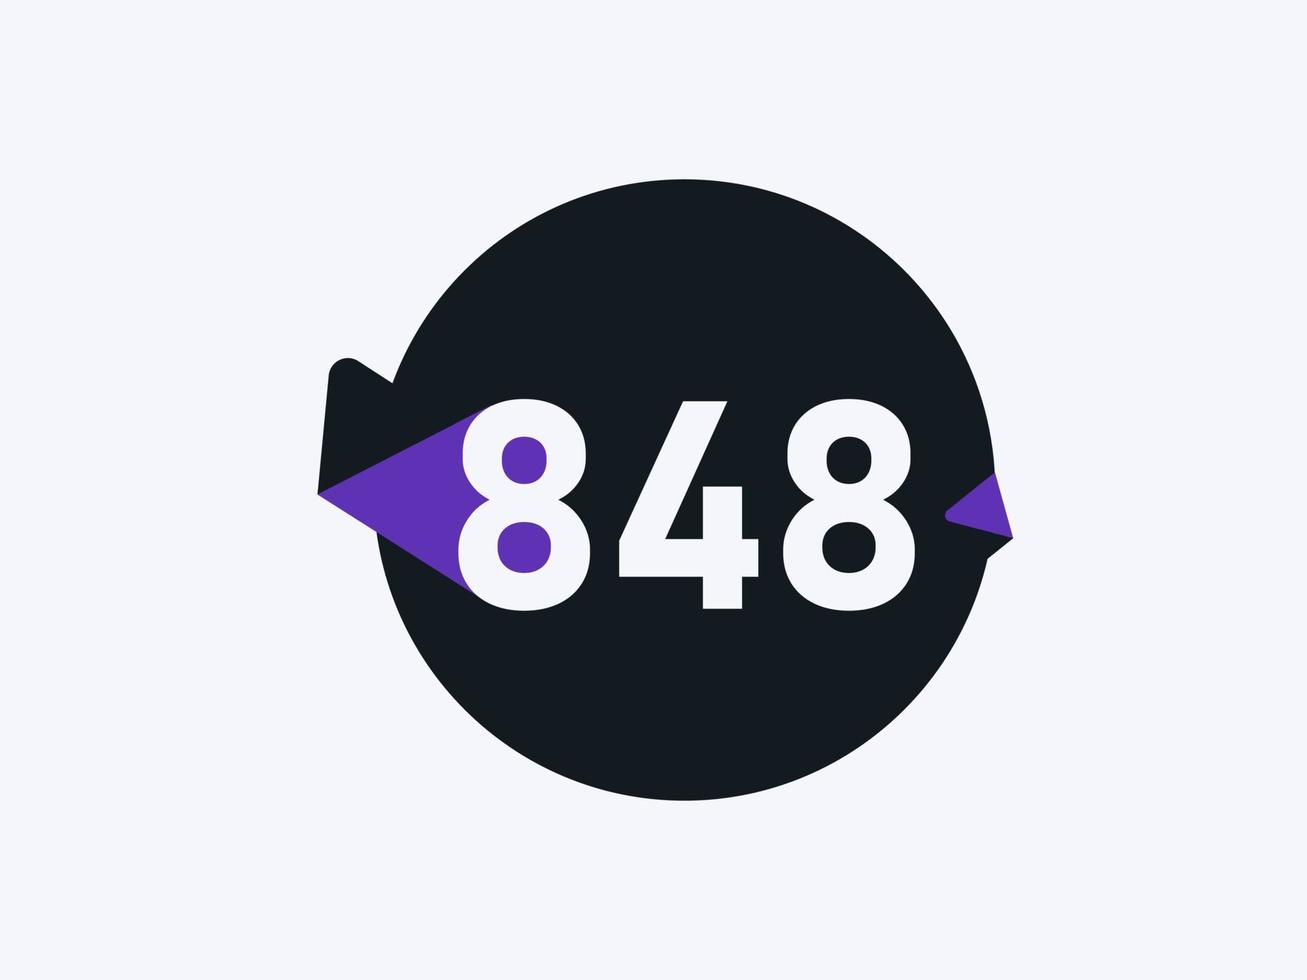 848 Number logo icon design vector image. Number logo icon design vector image